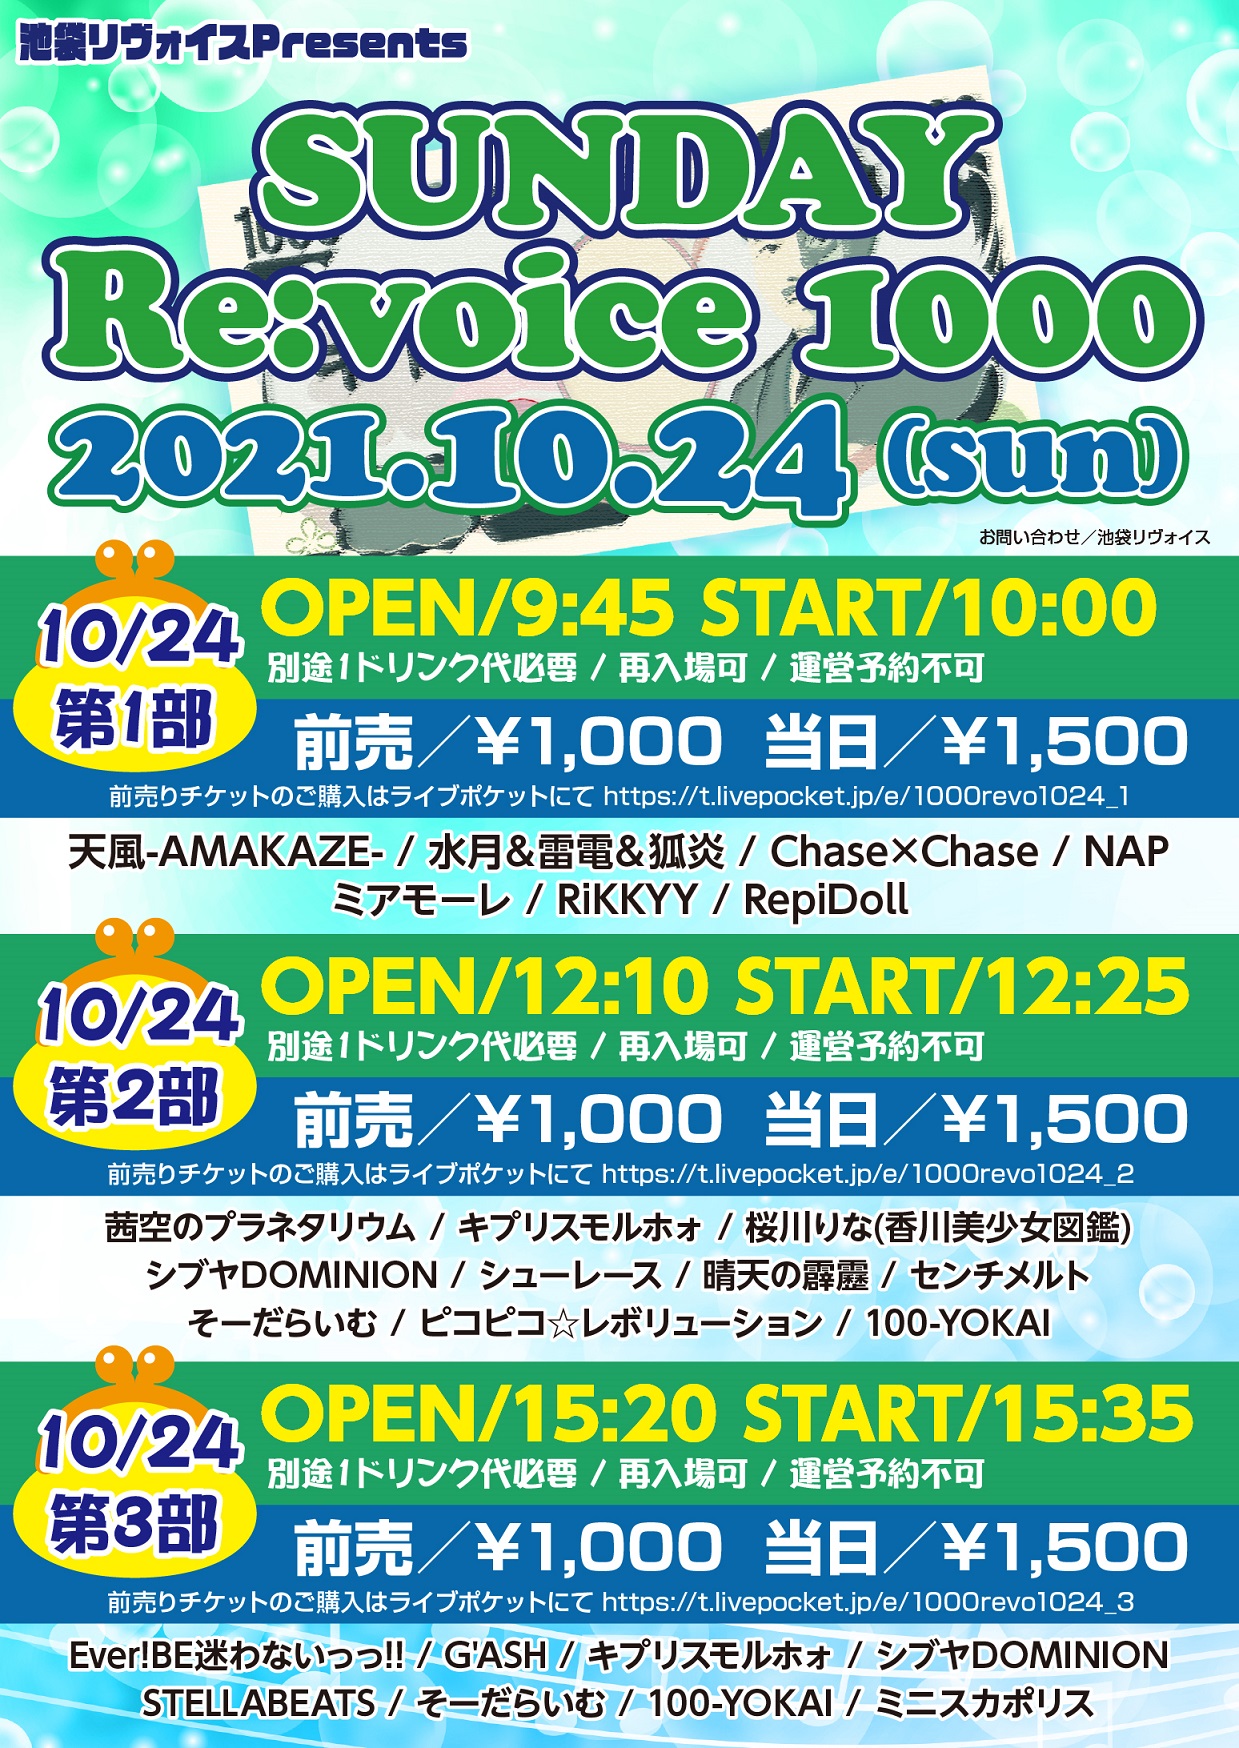 SUNDAY Re:voice 1000(10/24)